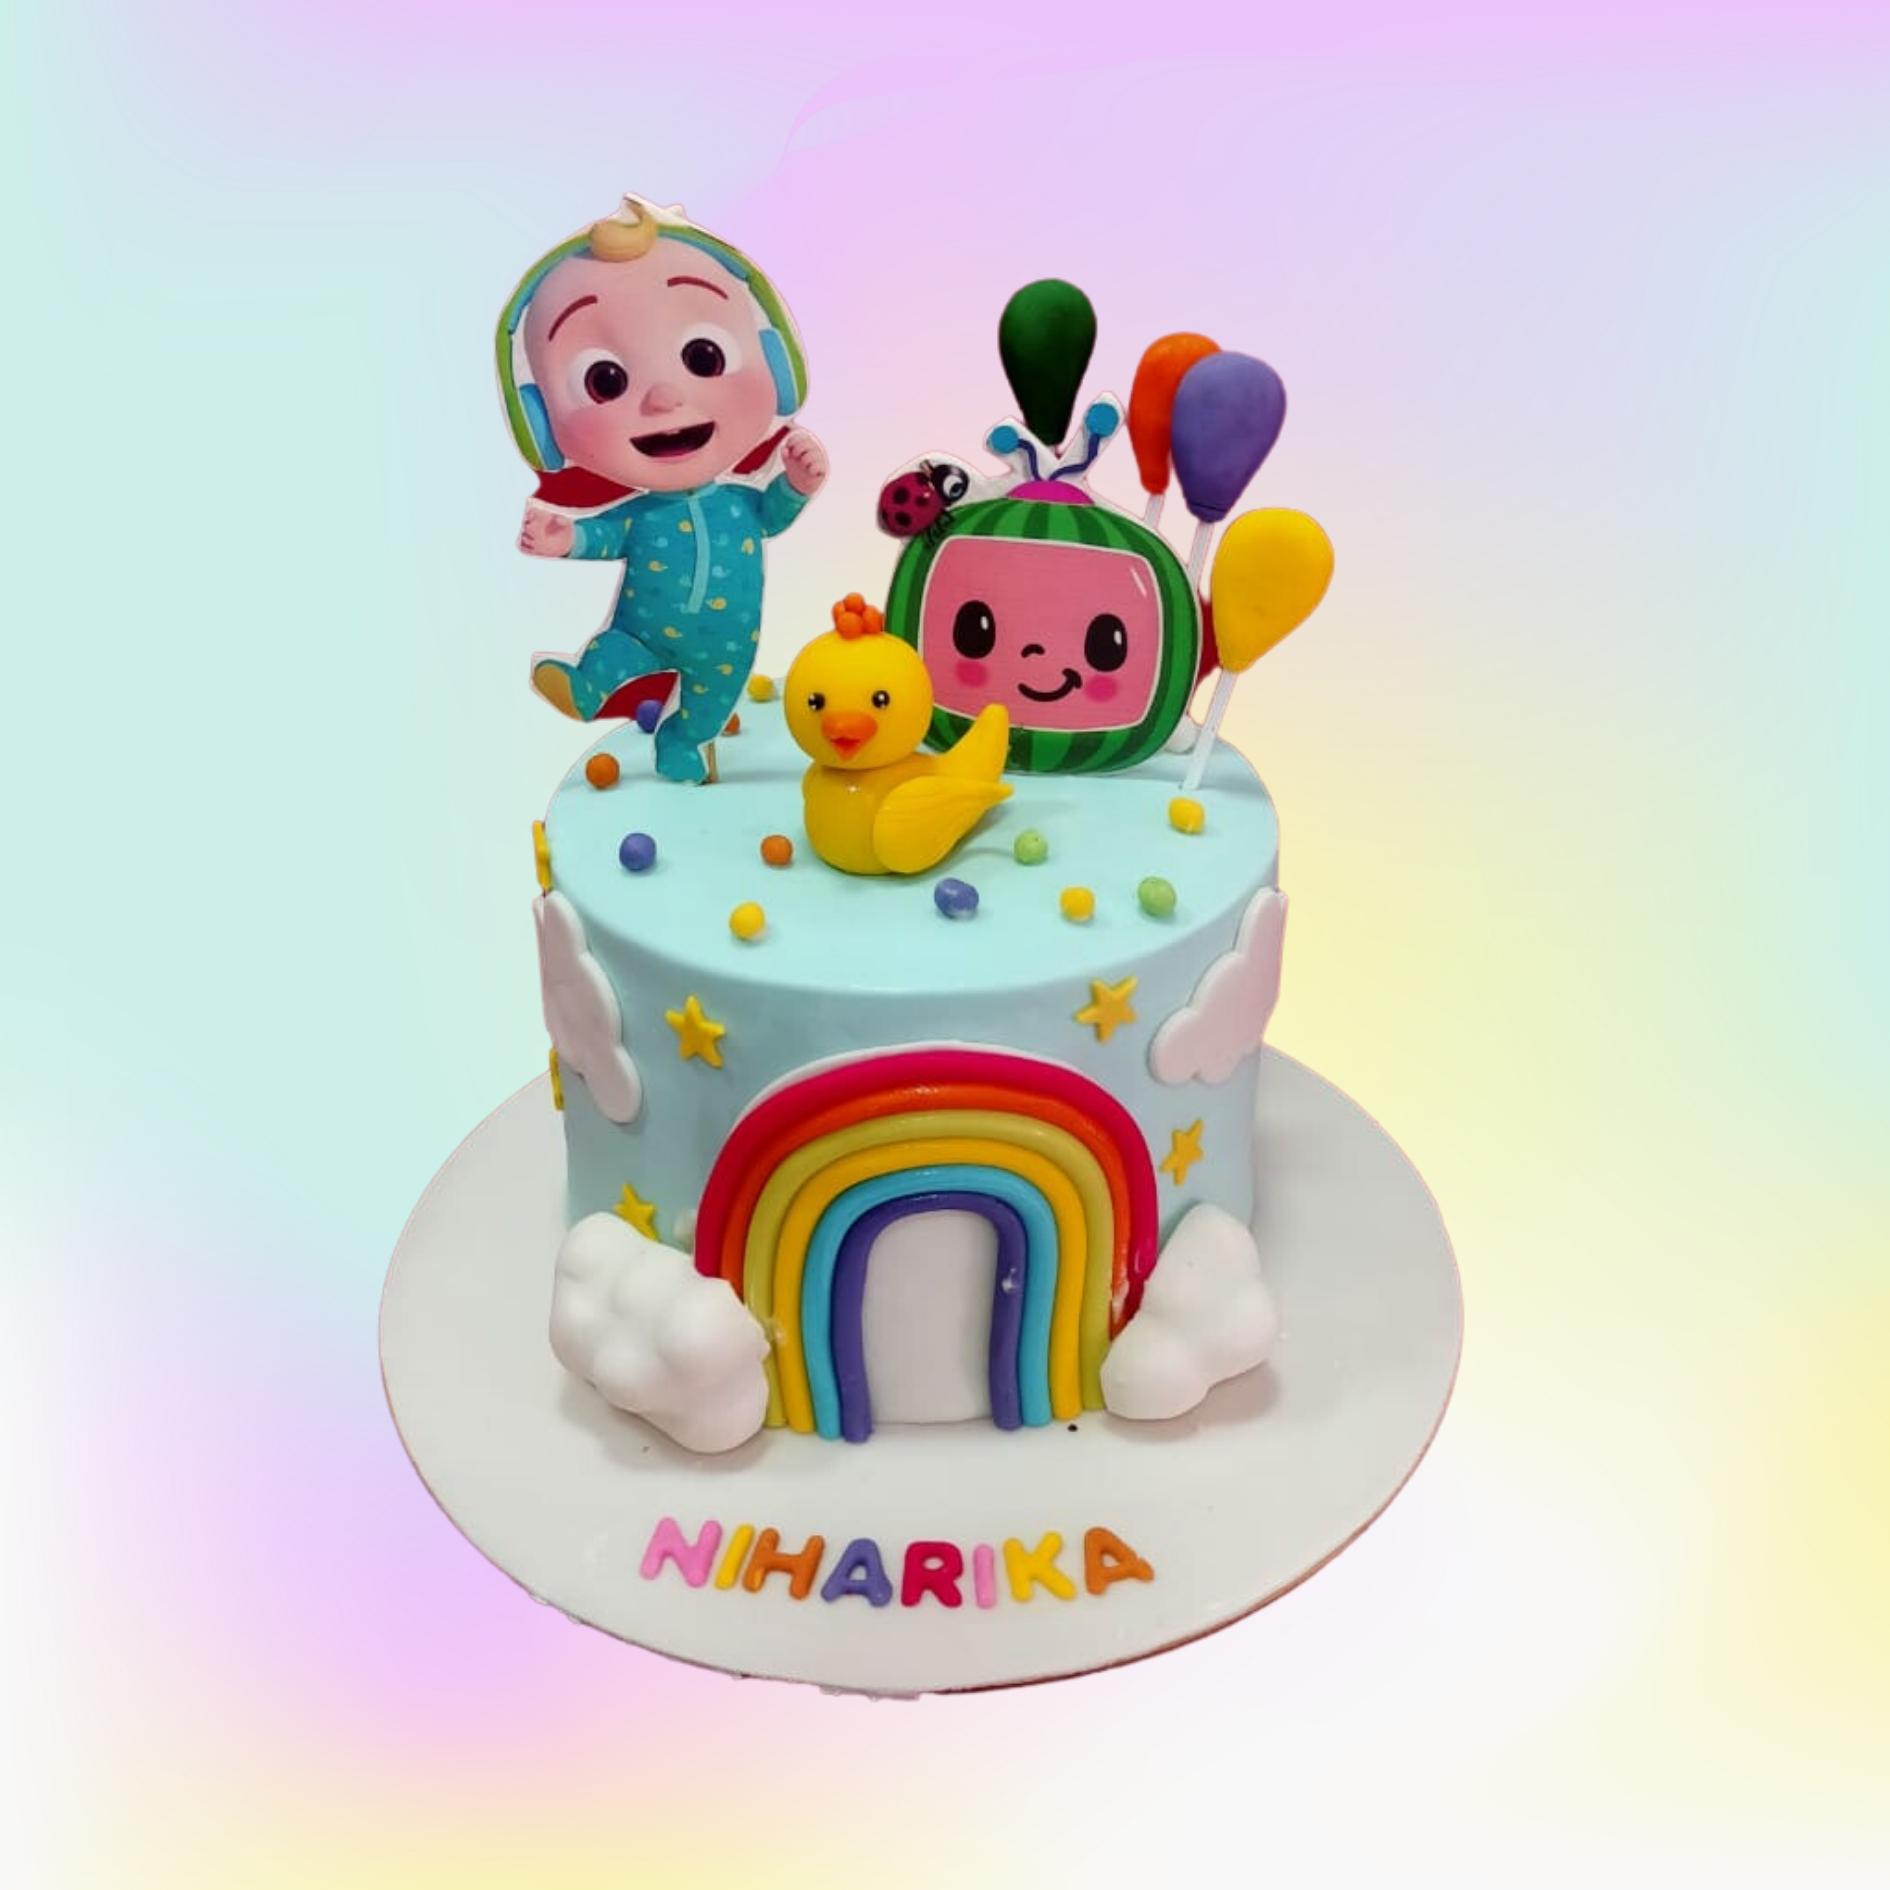 Happy Birthday Niharika Image Wishes General Video Animation - YouTube